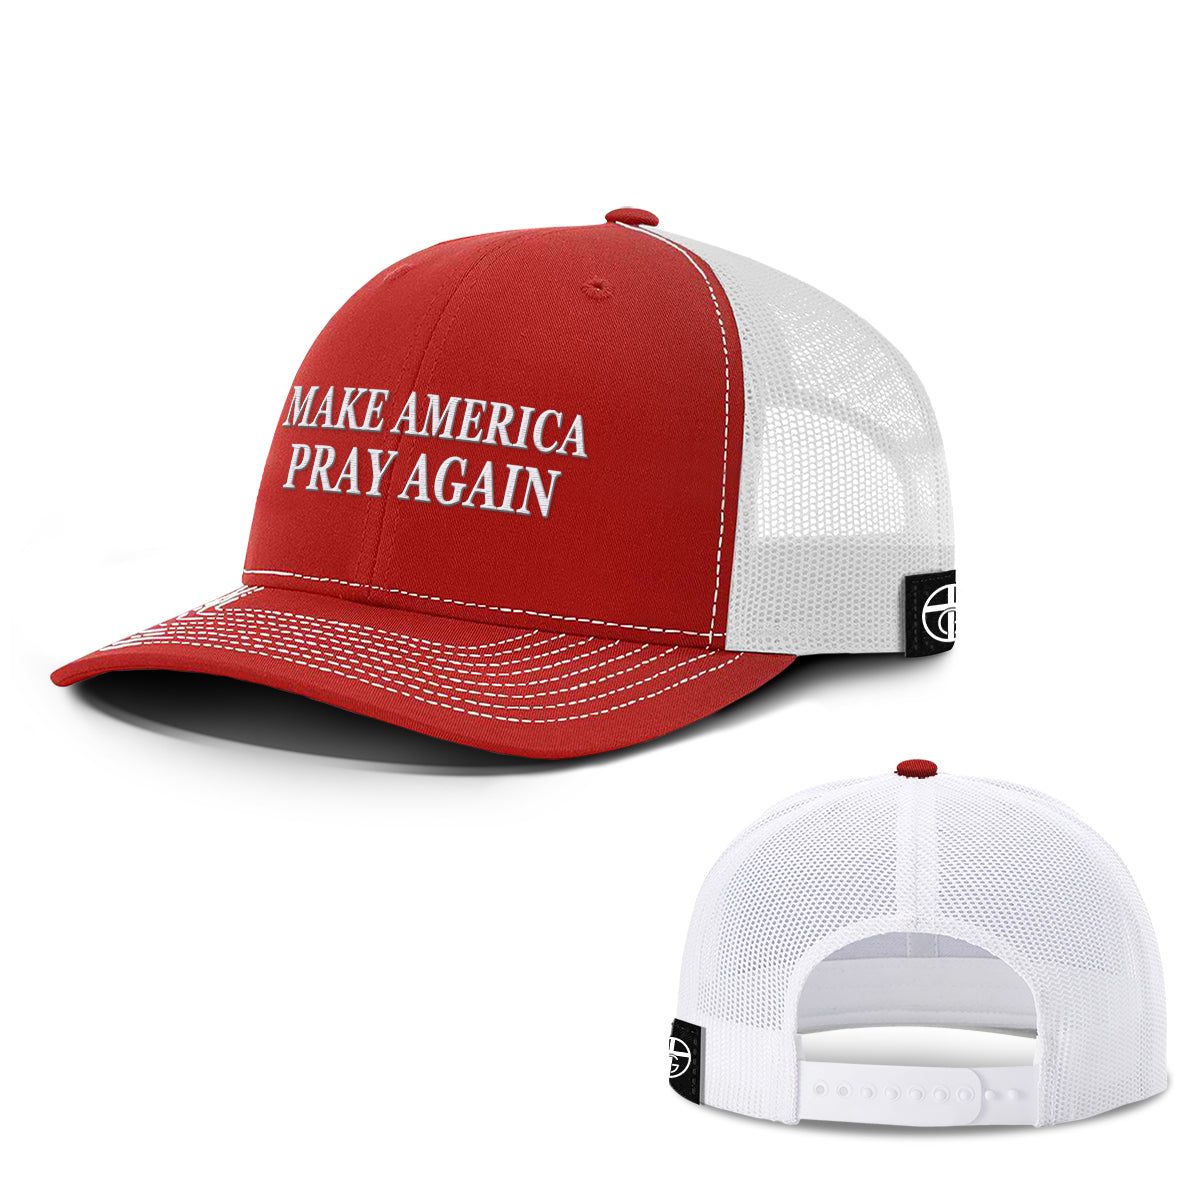 Make America Pray Again Hats